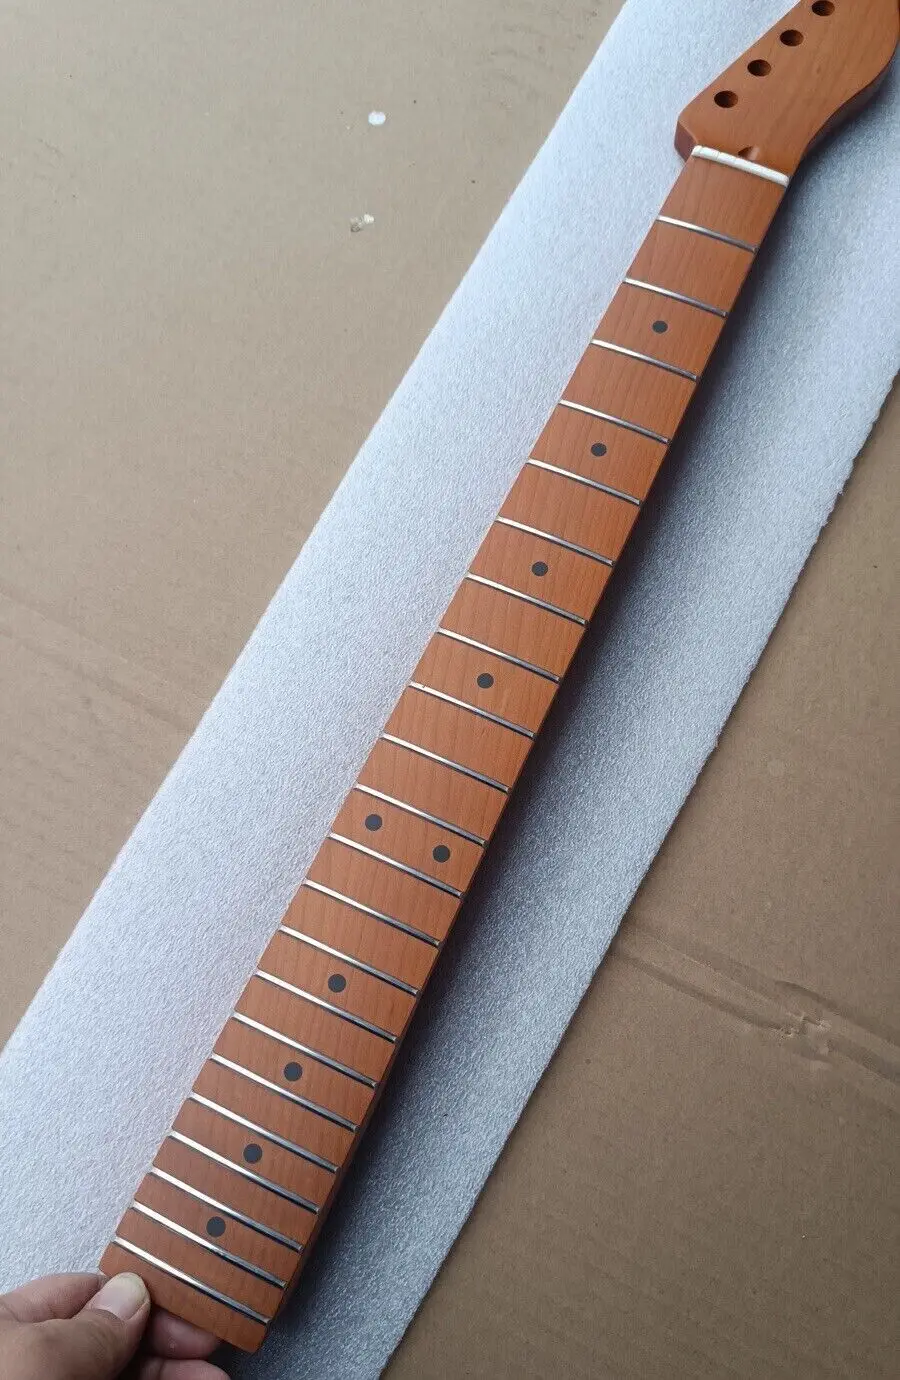 Enlarge New 22fret toasted maple guitar neck 25.5